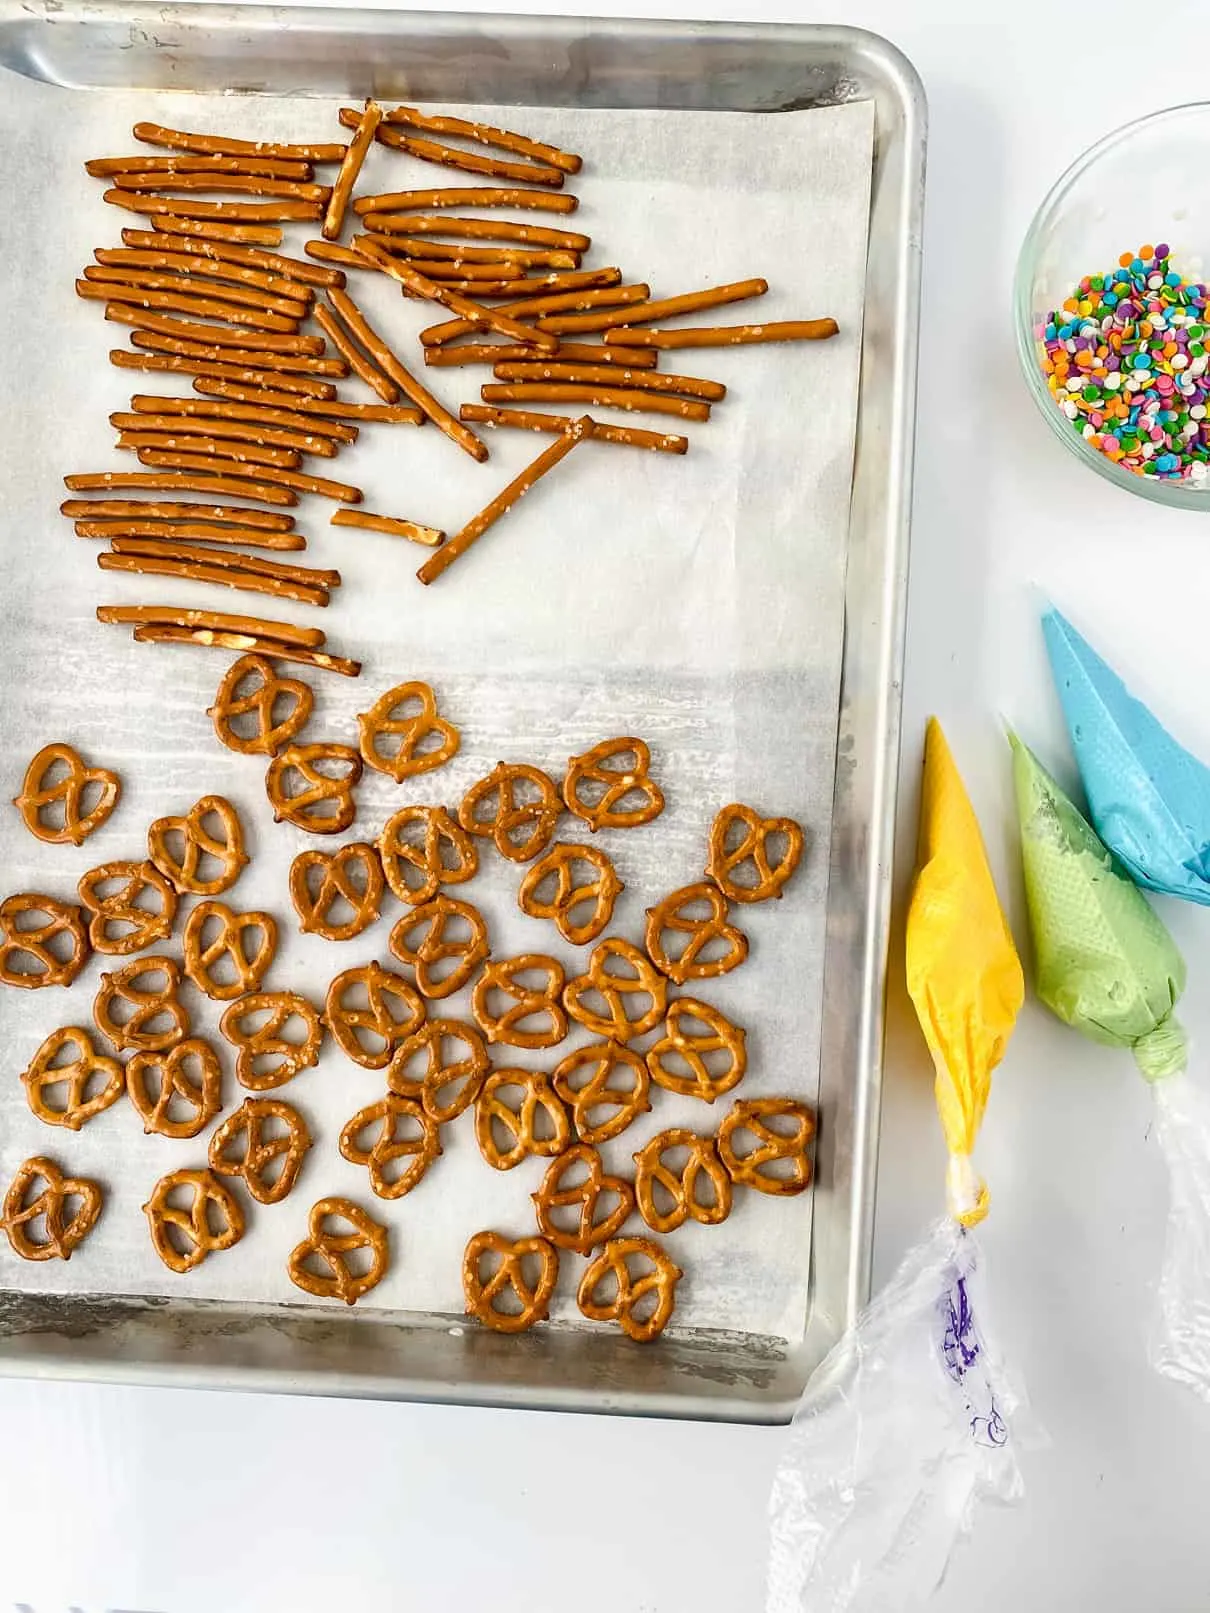 Ingredients to make chocolate striped pretzels